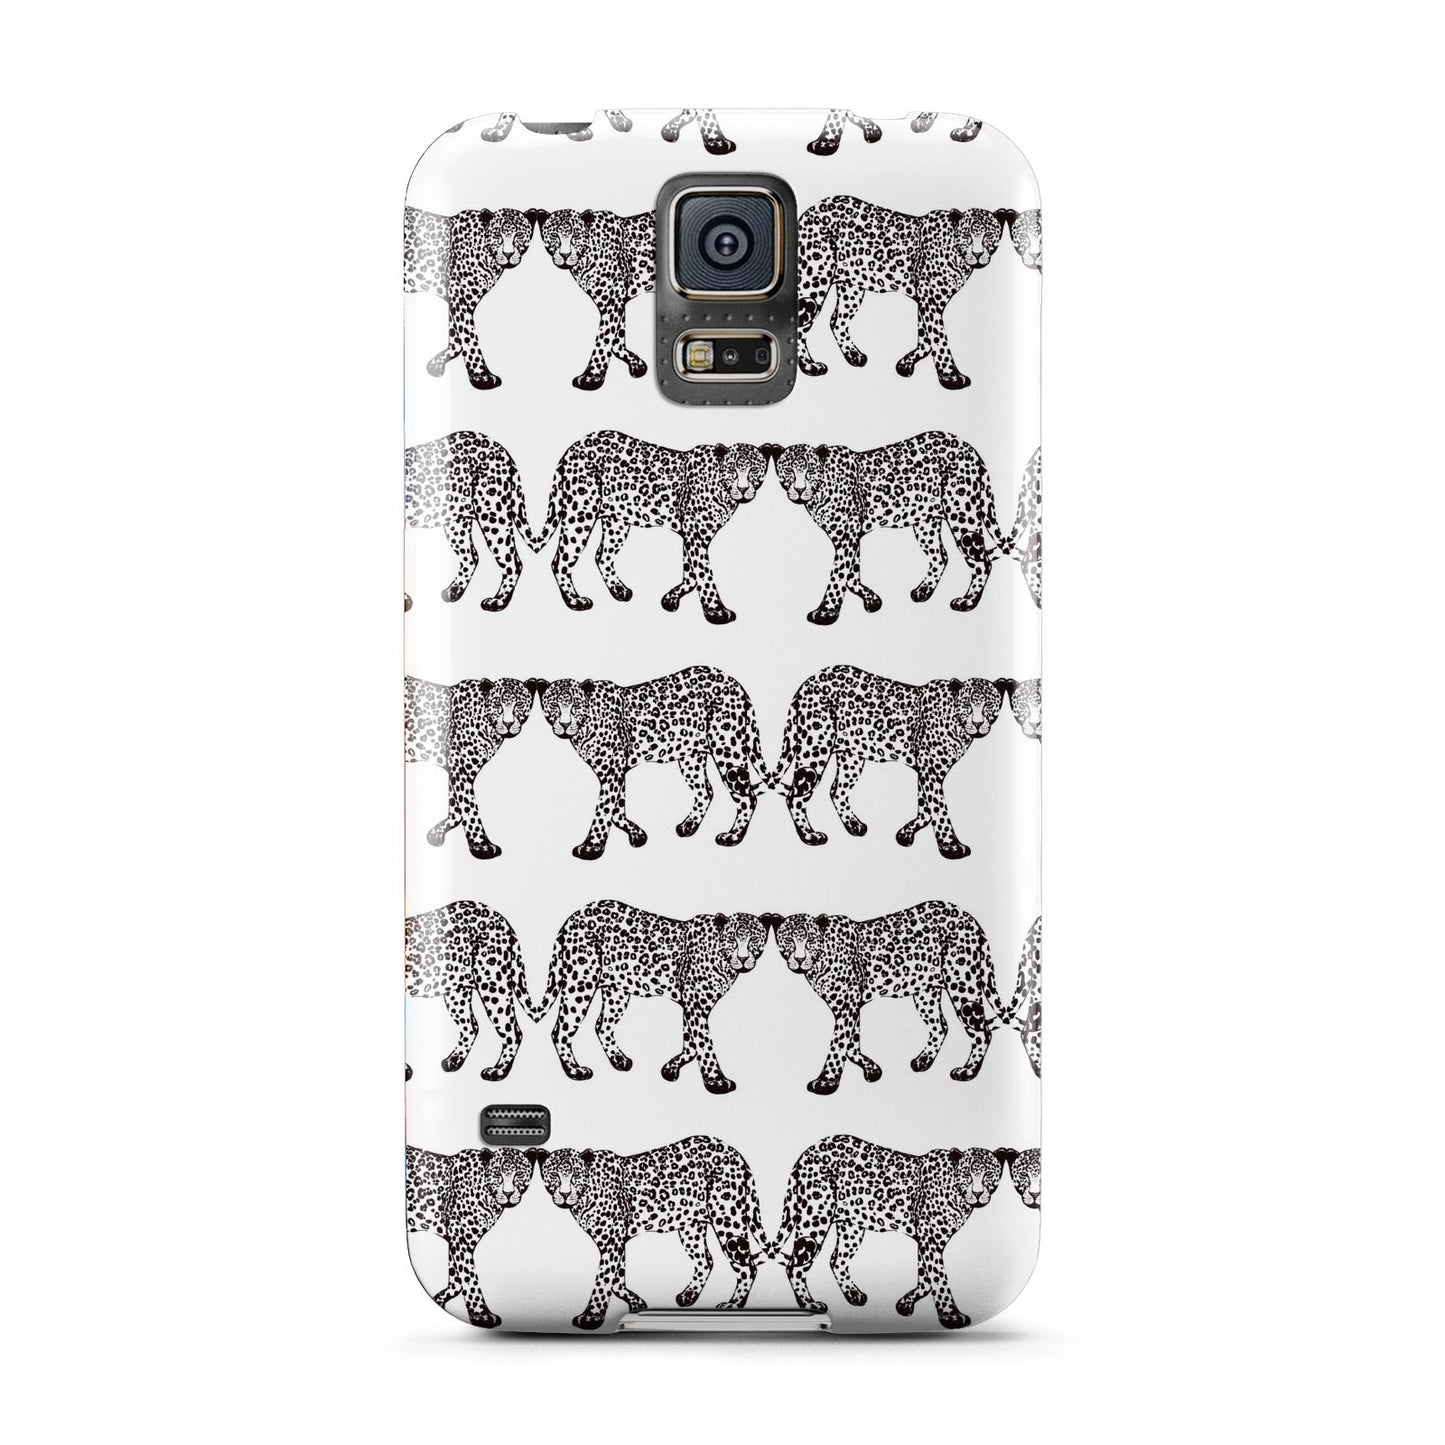 Monochrome Mirrored Leopard Print Samsung Galaxy S5 Case